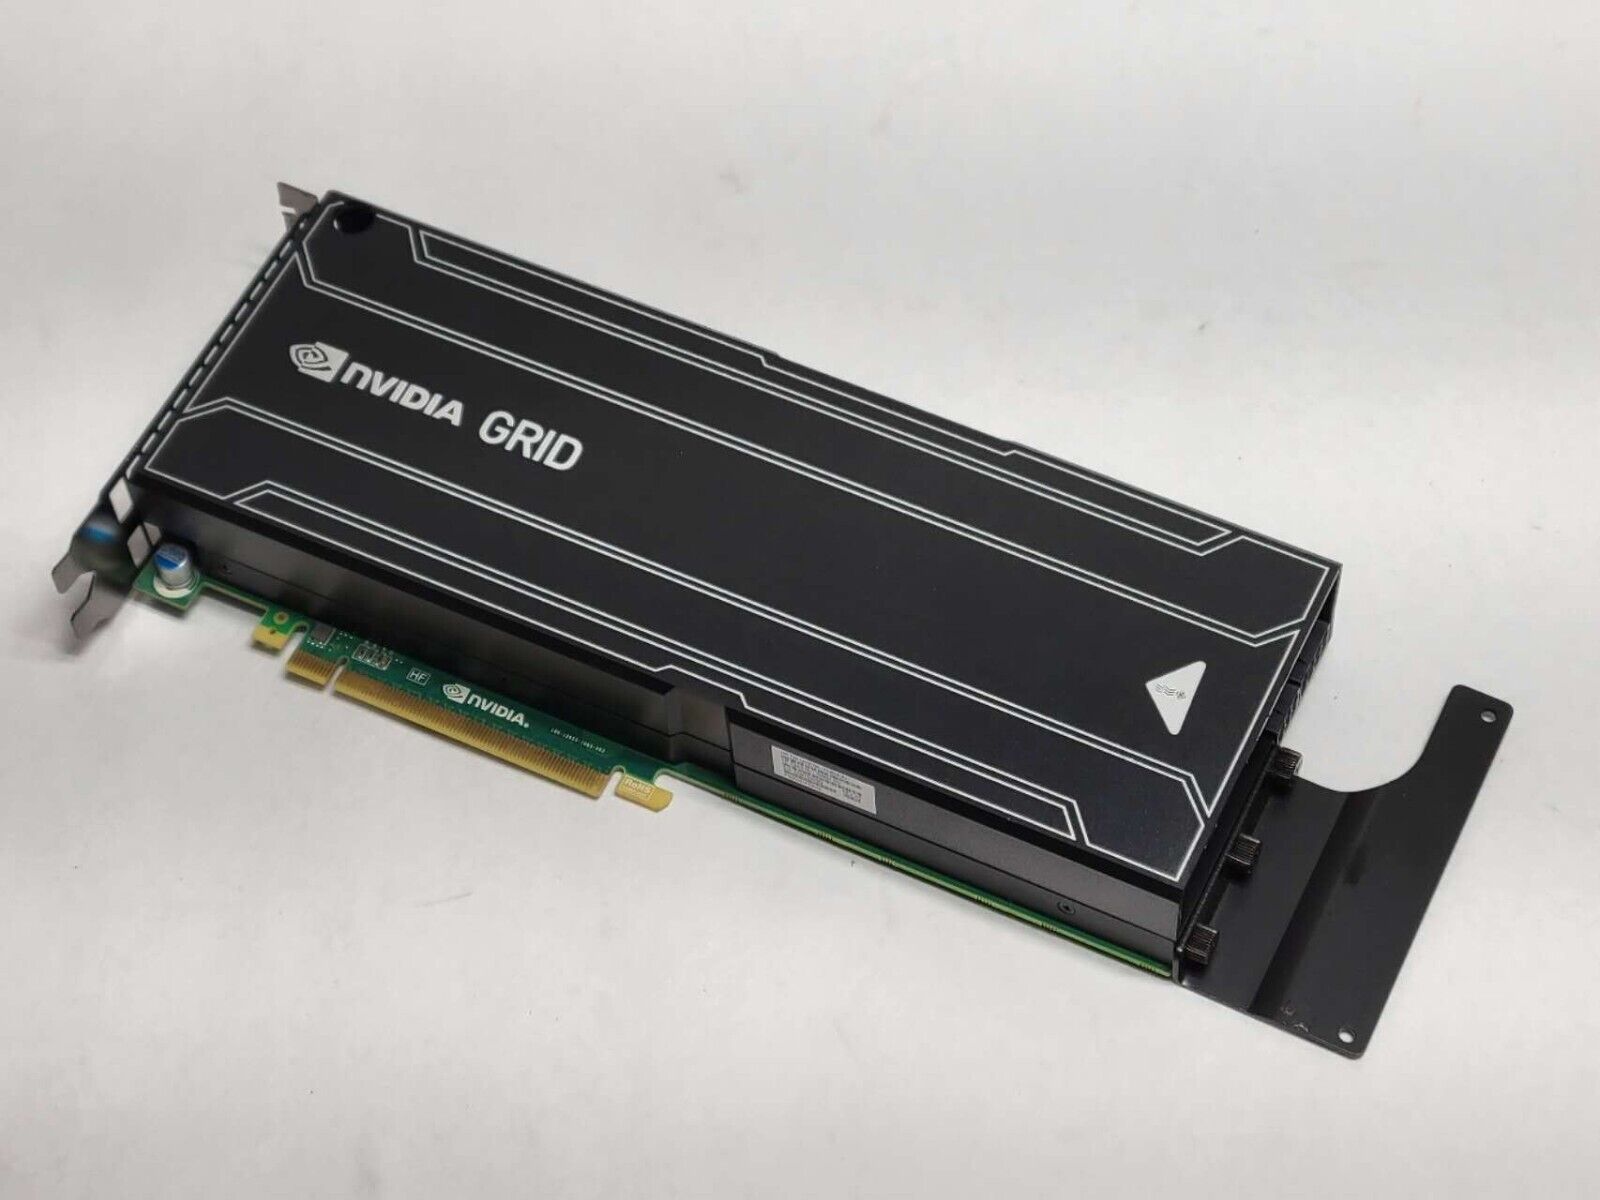 HP NVIDIA Grid K2 8GB GDDR5 PCIE GPU Dual Graphics Video Card GPU 756822-001